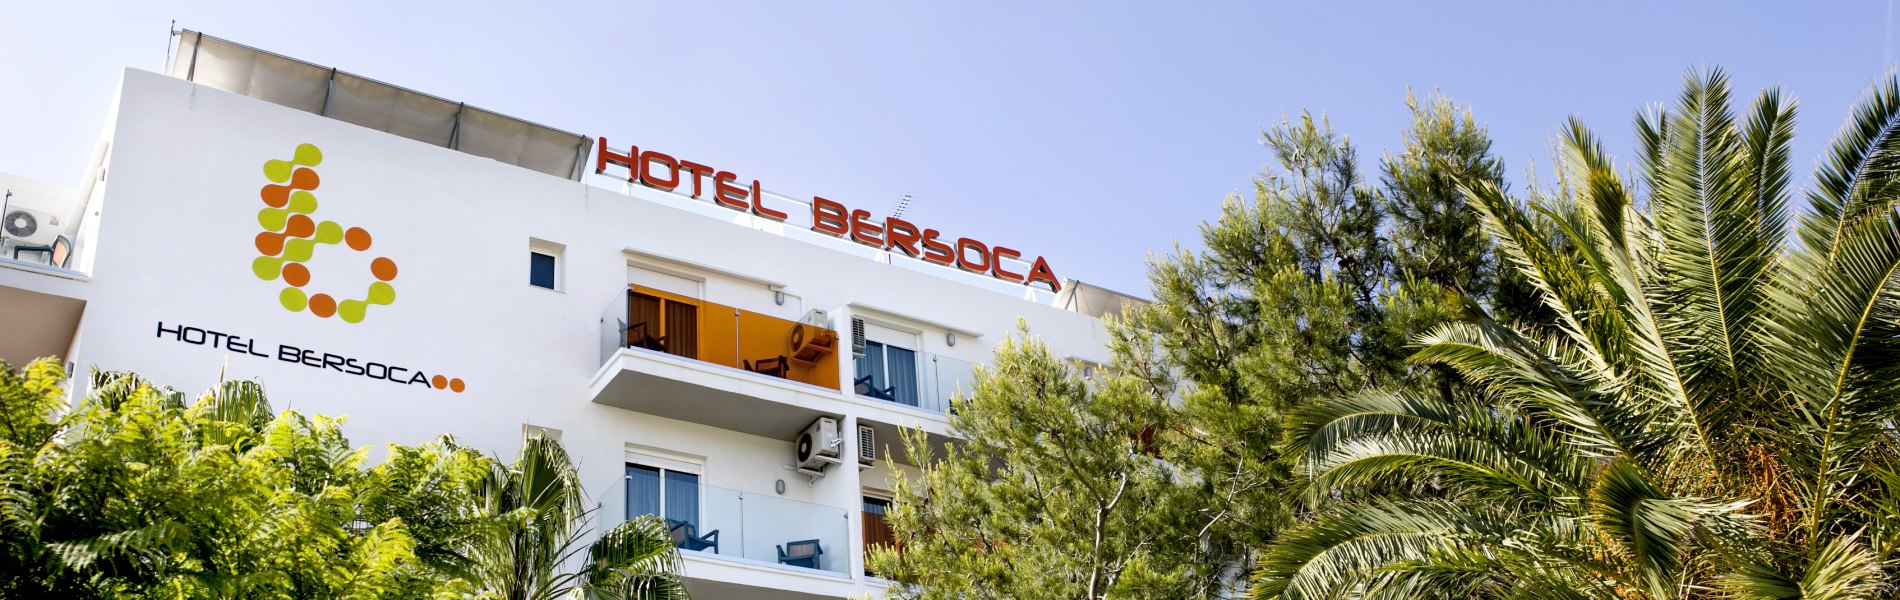 Hotel Bersoca  header